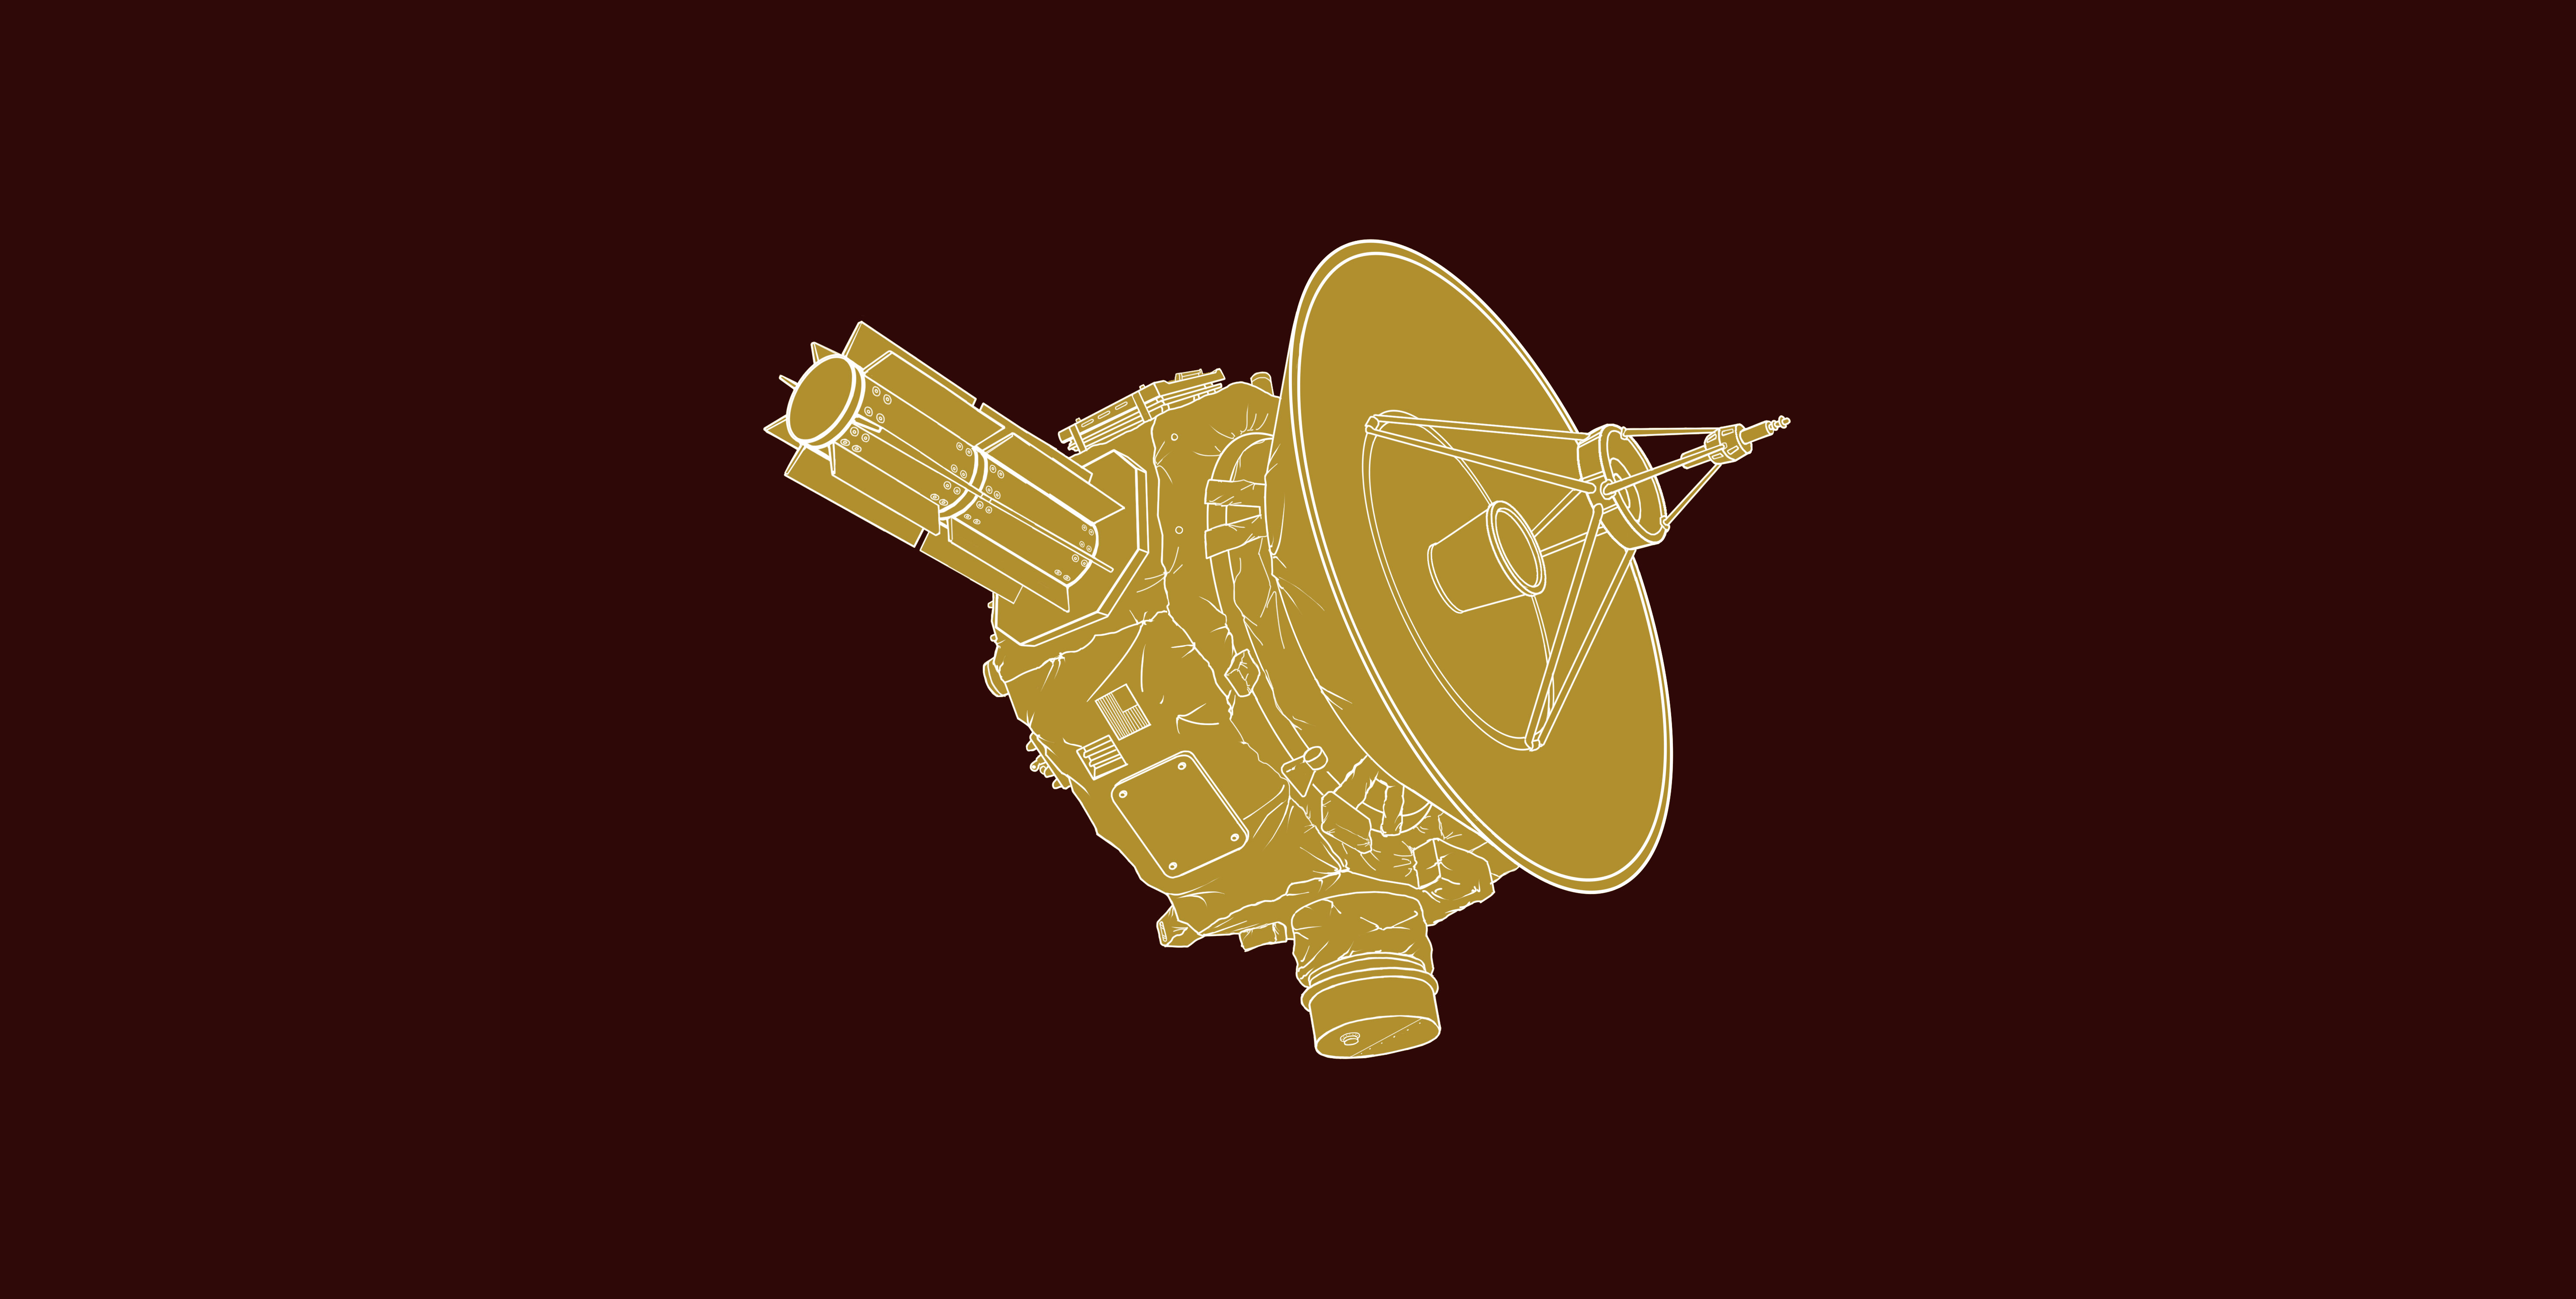 Artist’s illustration of the New Horizons spacecraft. Credit: Sebastian Kings